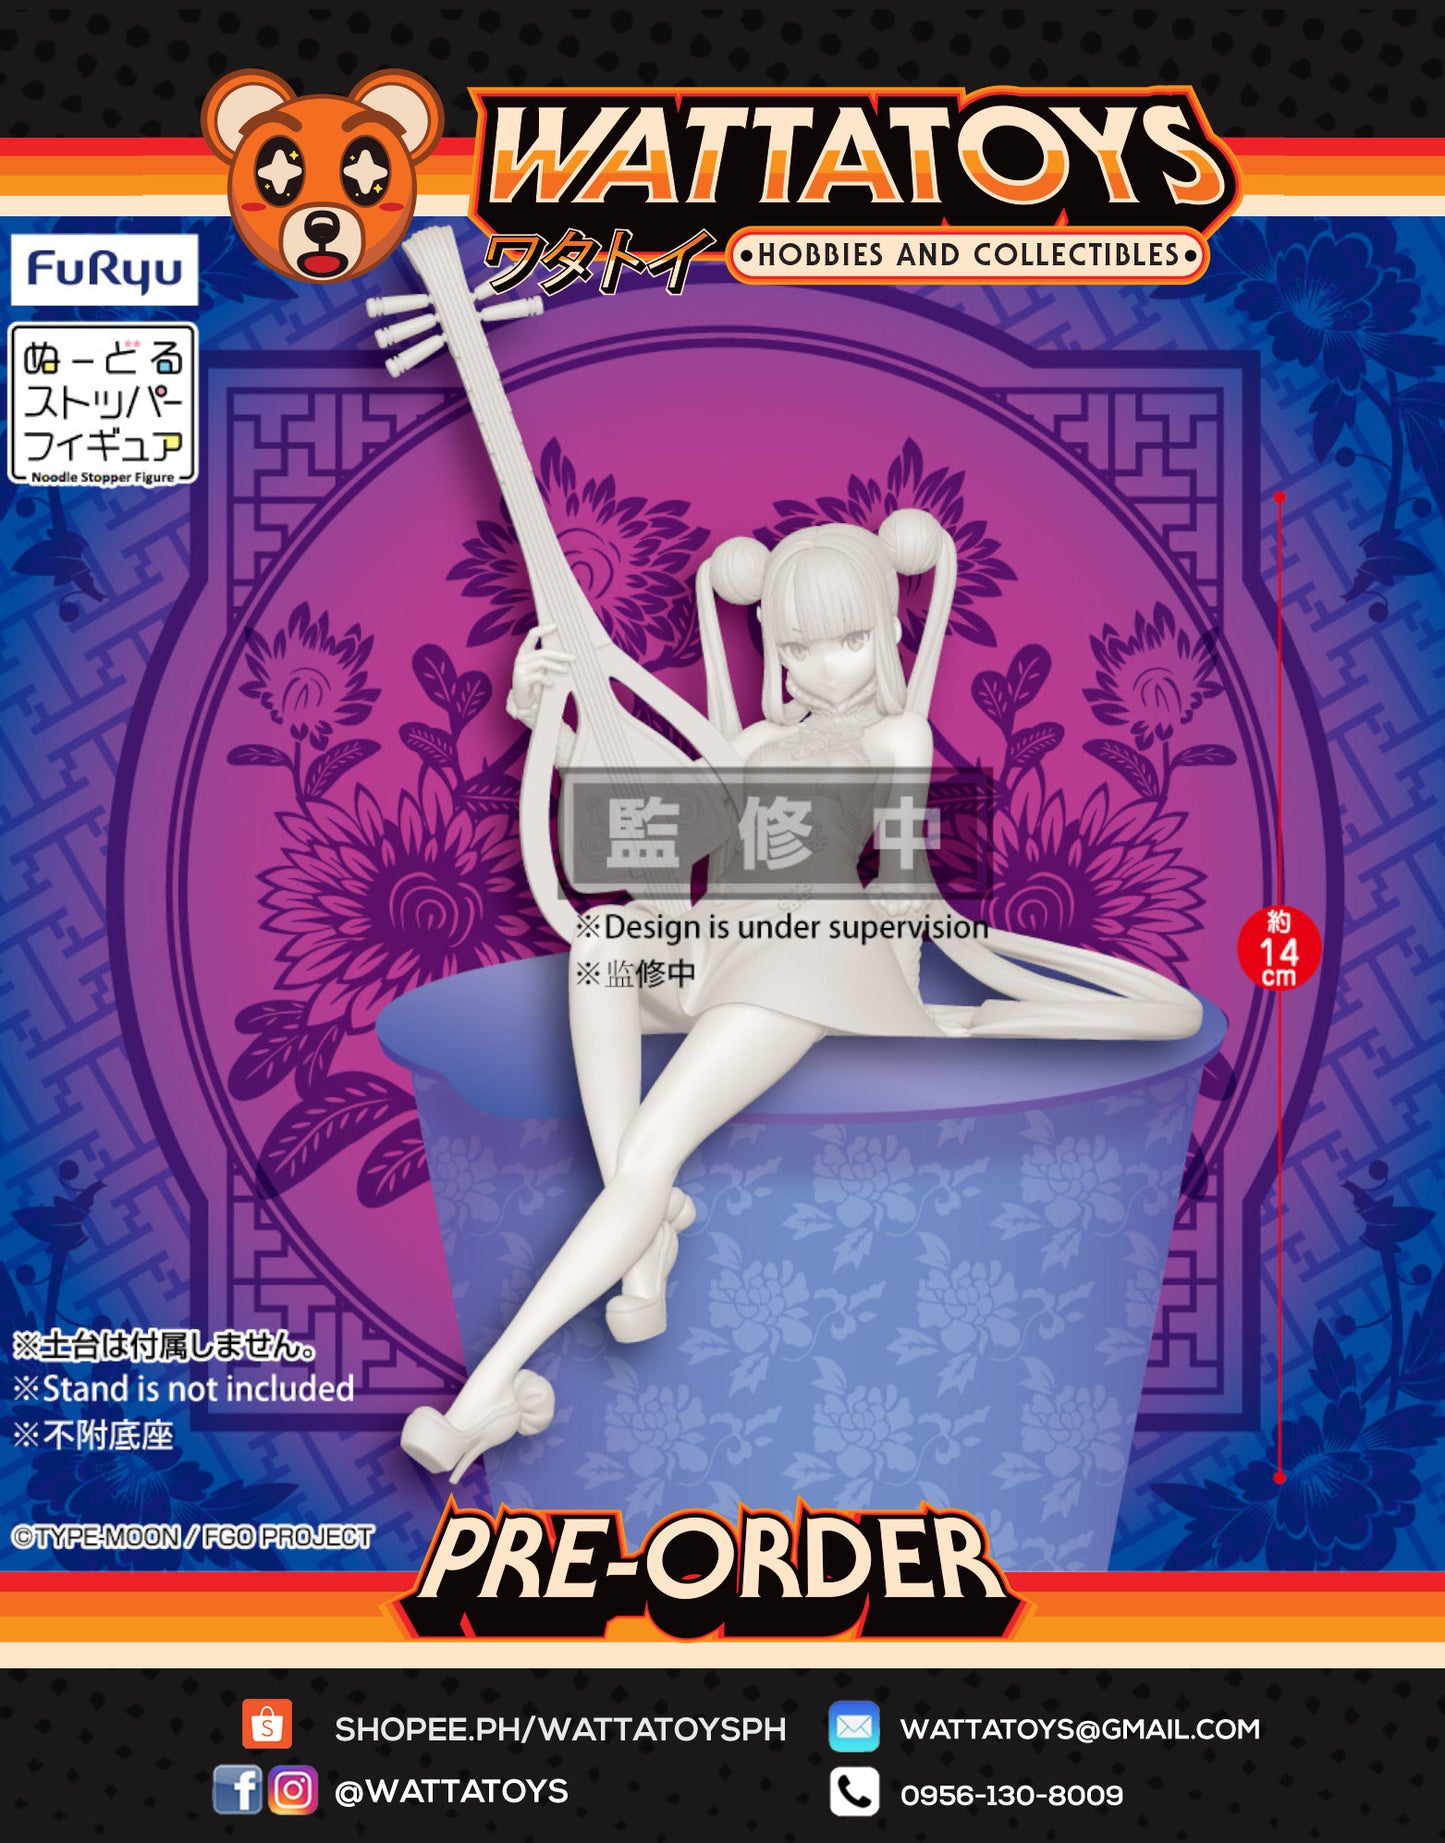 PRE ORDER Fate/Grand Order Noodle Stopper Figure - Foreigner/Yokihi